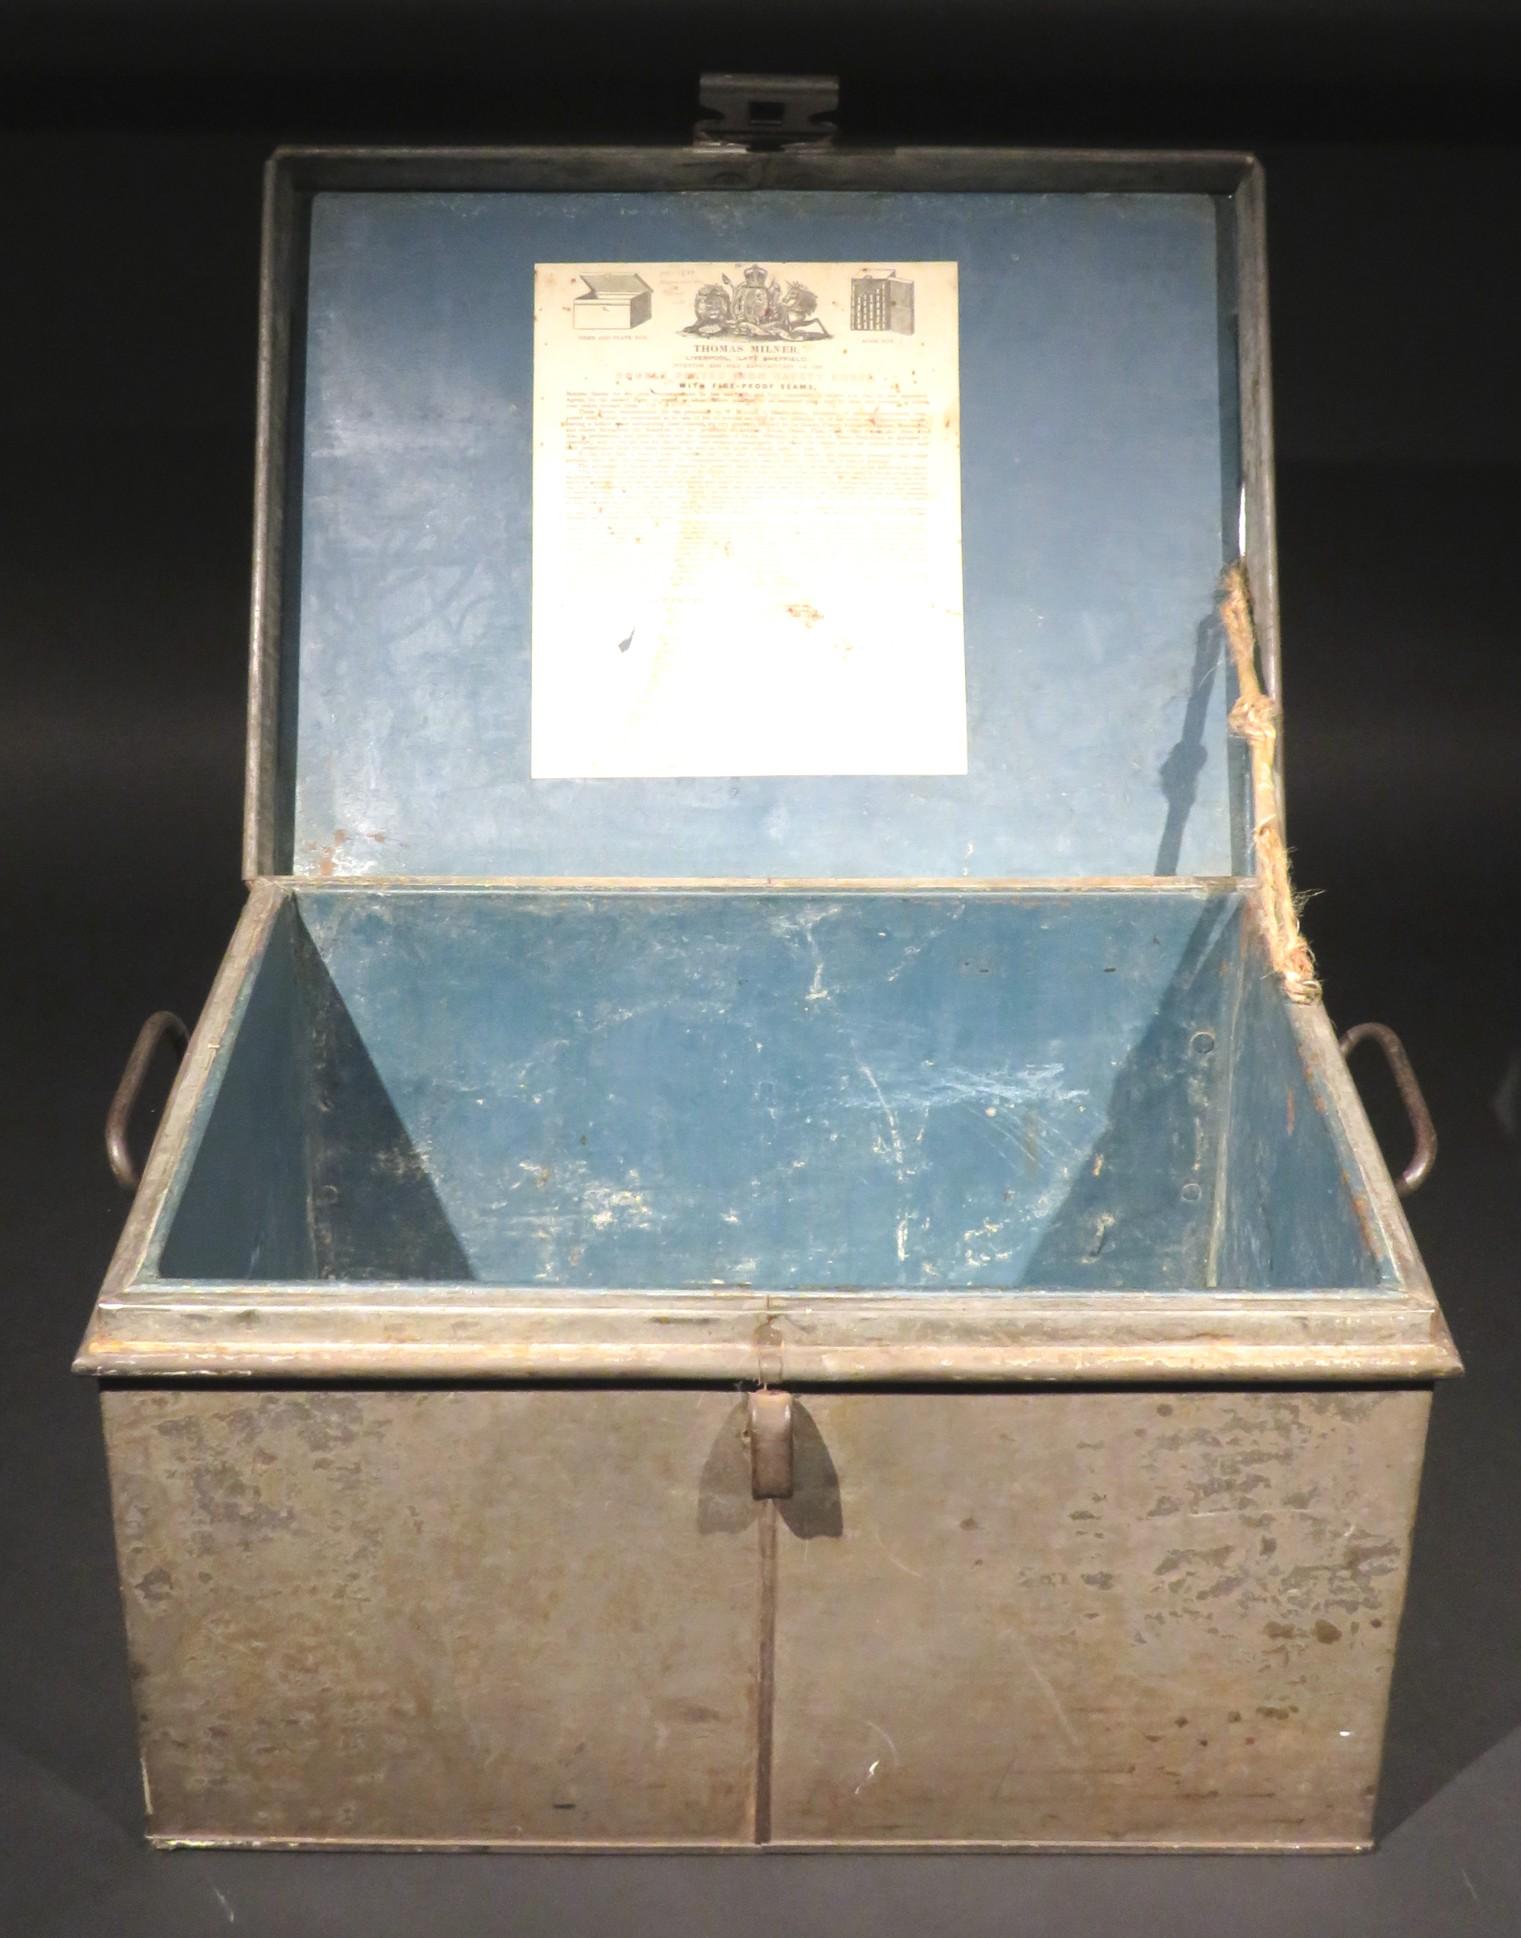 British Authentic 19th Century Thomas Milner Patented Iron Safety Box, UK Circa 1840 For Sale